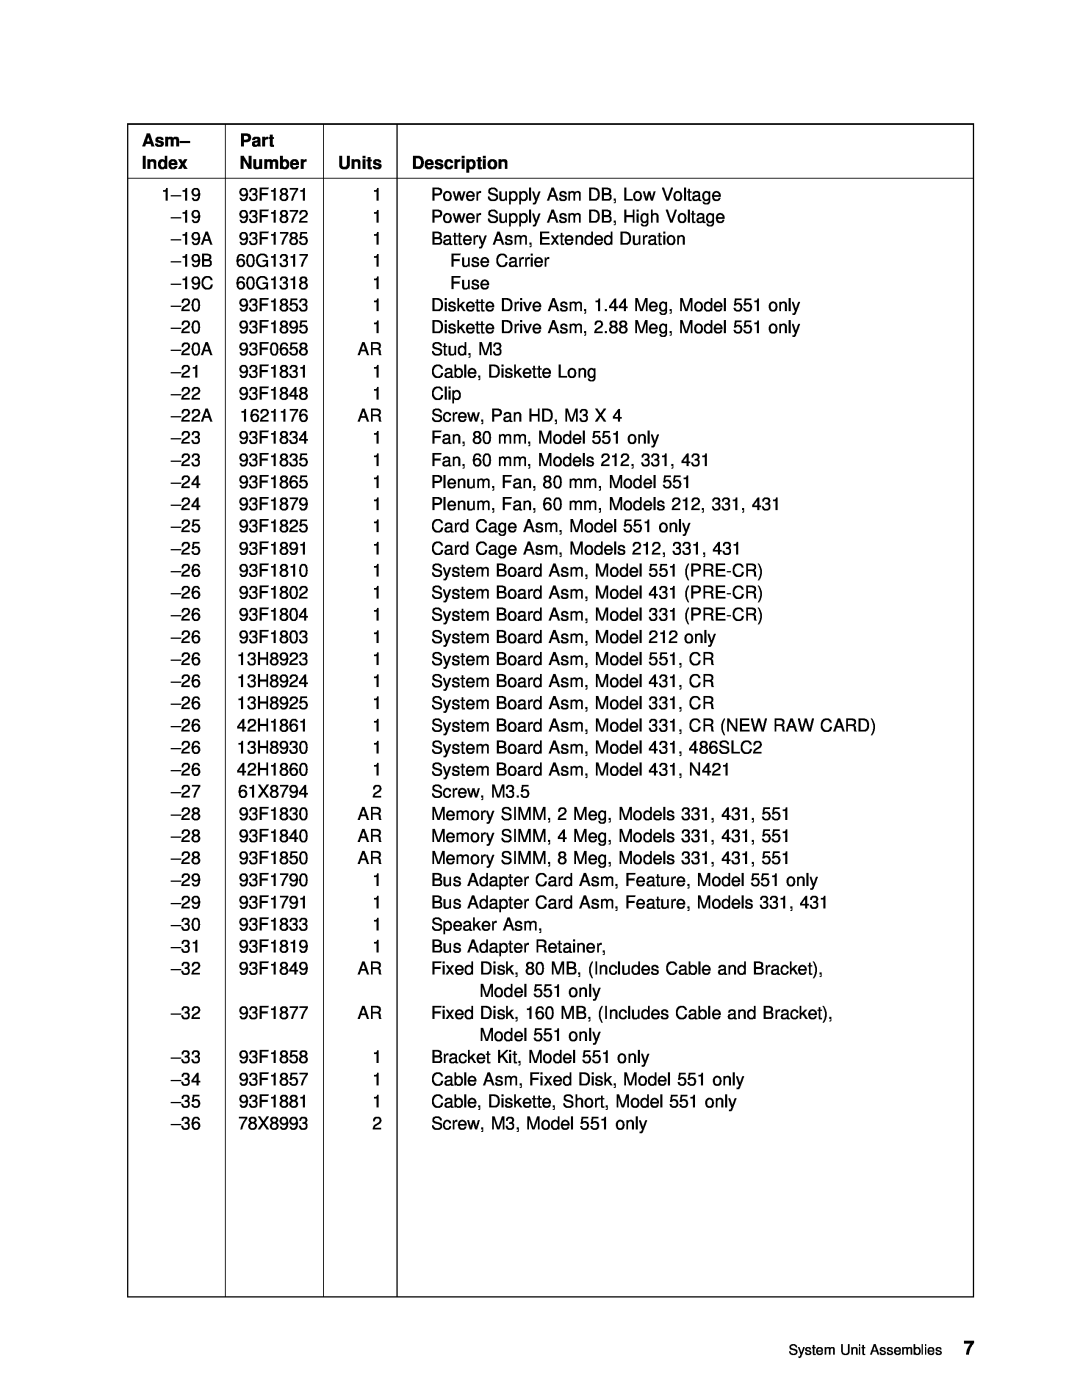 IBM 4694 DBCS FAMILY, 4693 DBCS FAMILY manual Part, Index, Description 